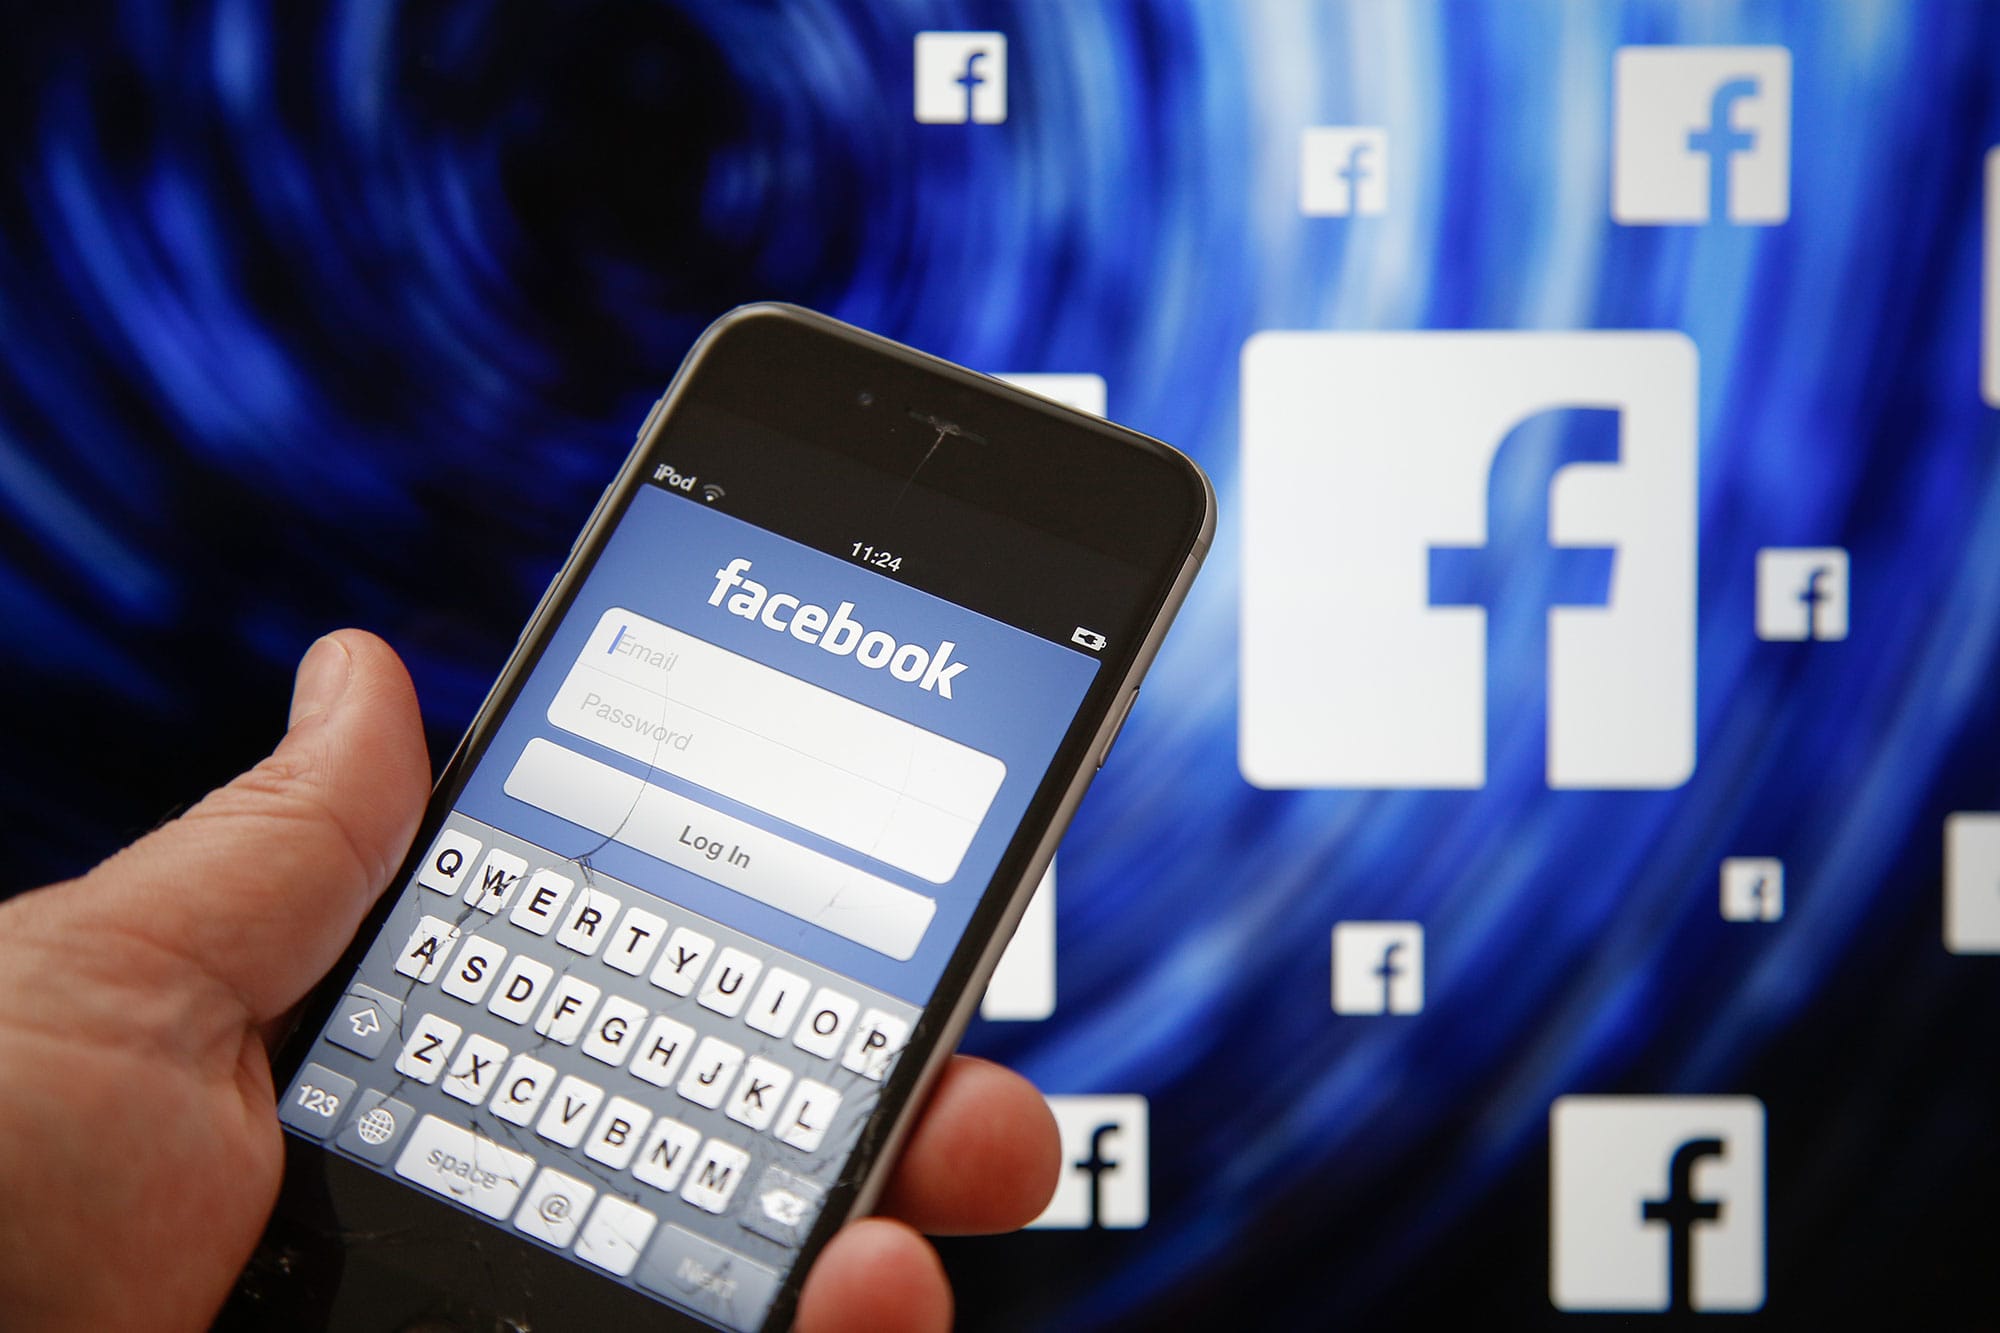 Lock's facebook login button violates Facebook policy - Auth0 Community